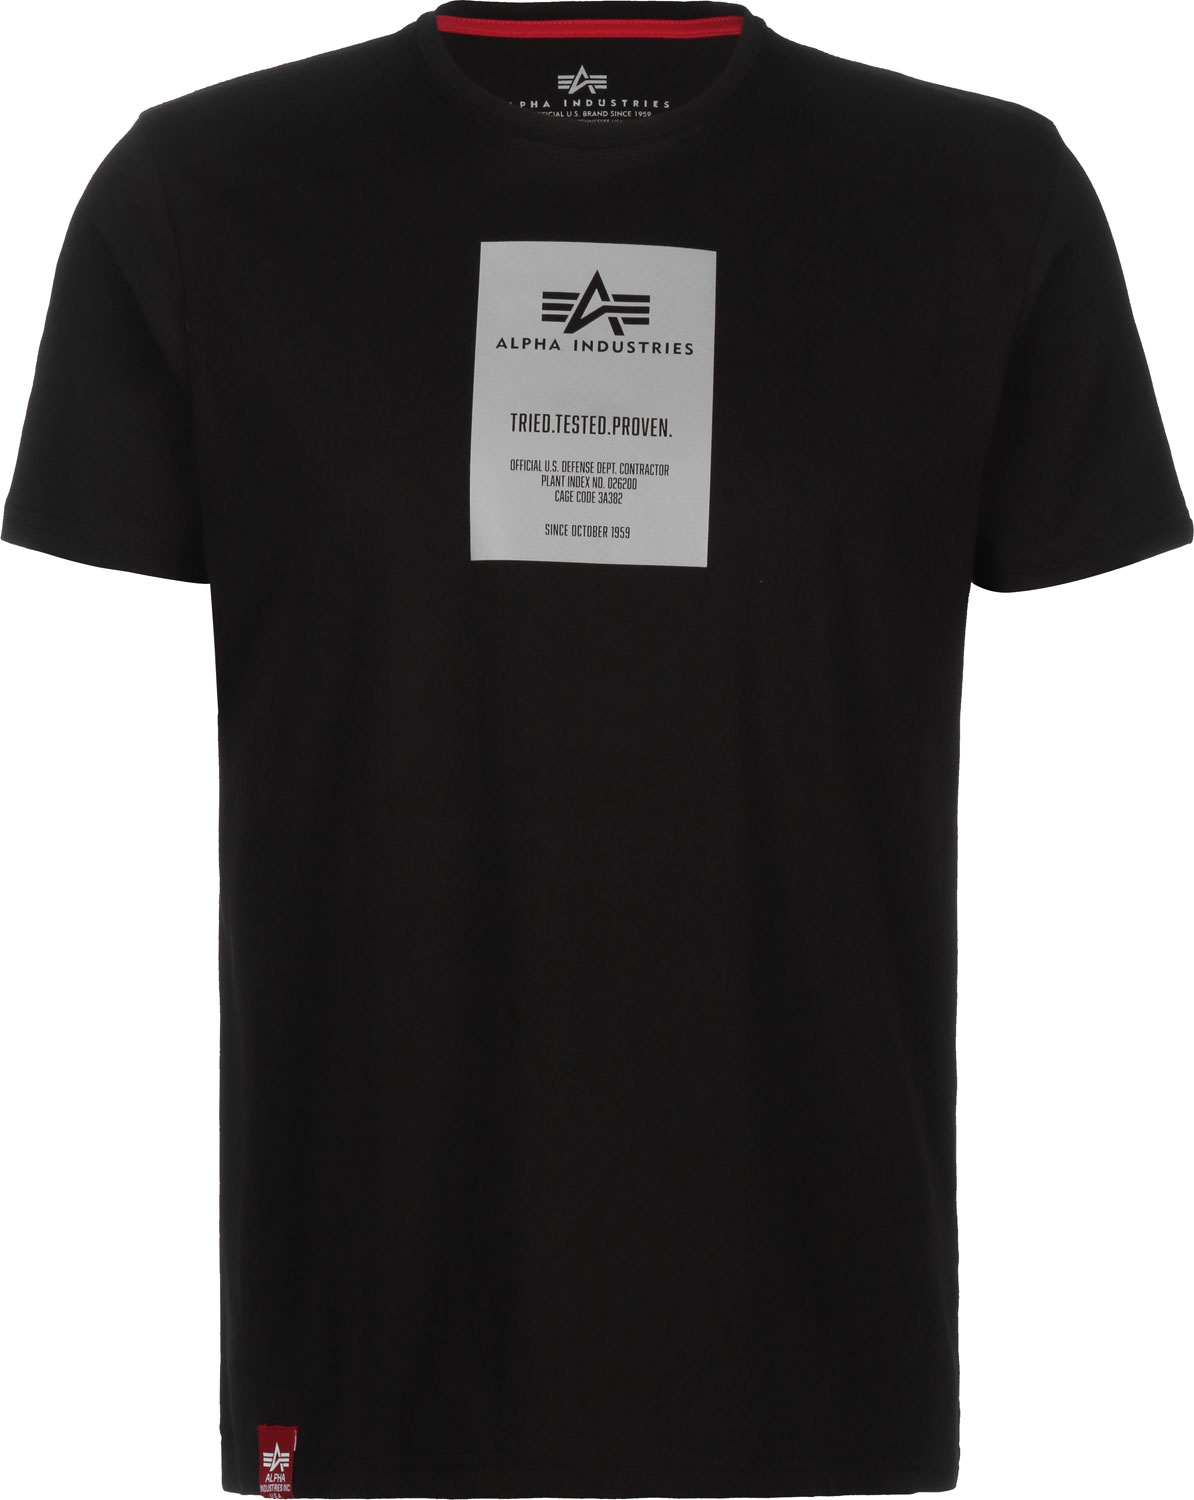 Alpha Industries Reflective Label 515 The (126515/09) T-Shirt Black - 